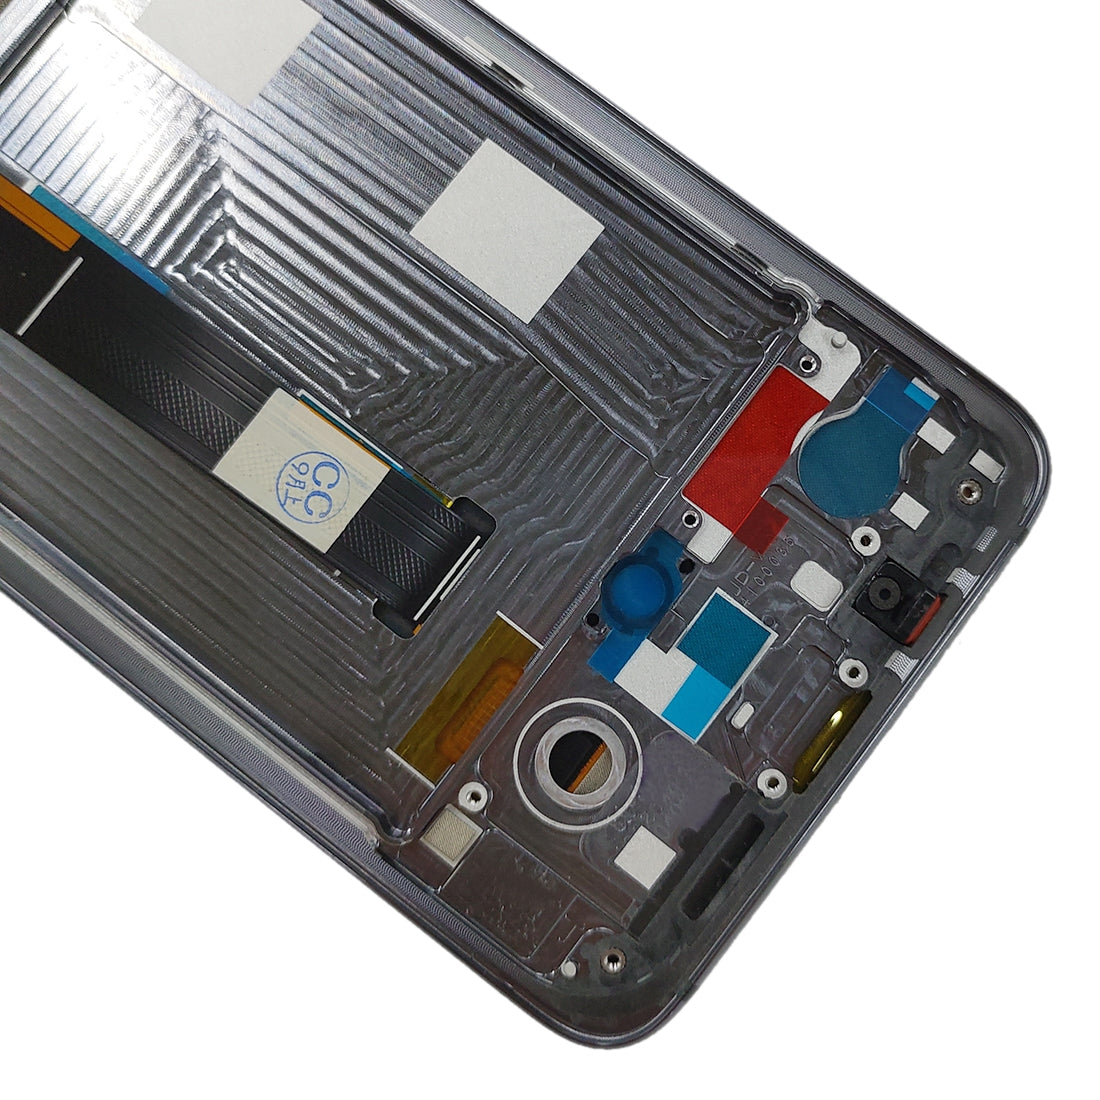 Ecran Complet LCD + Tactile + Châssis (Version Oled) Xiaomi MI 9 Noir